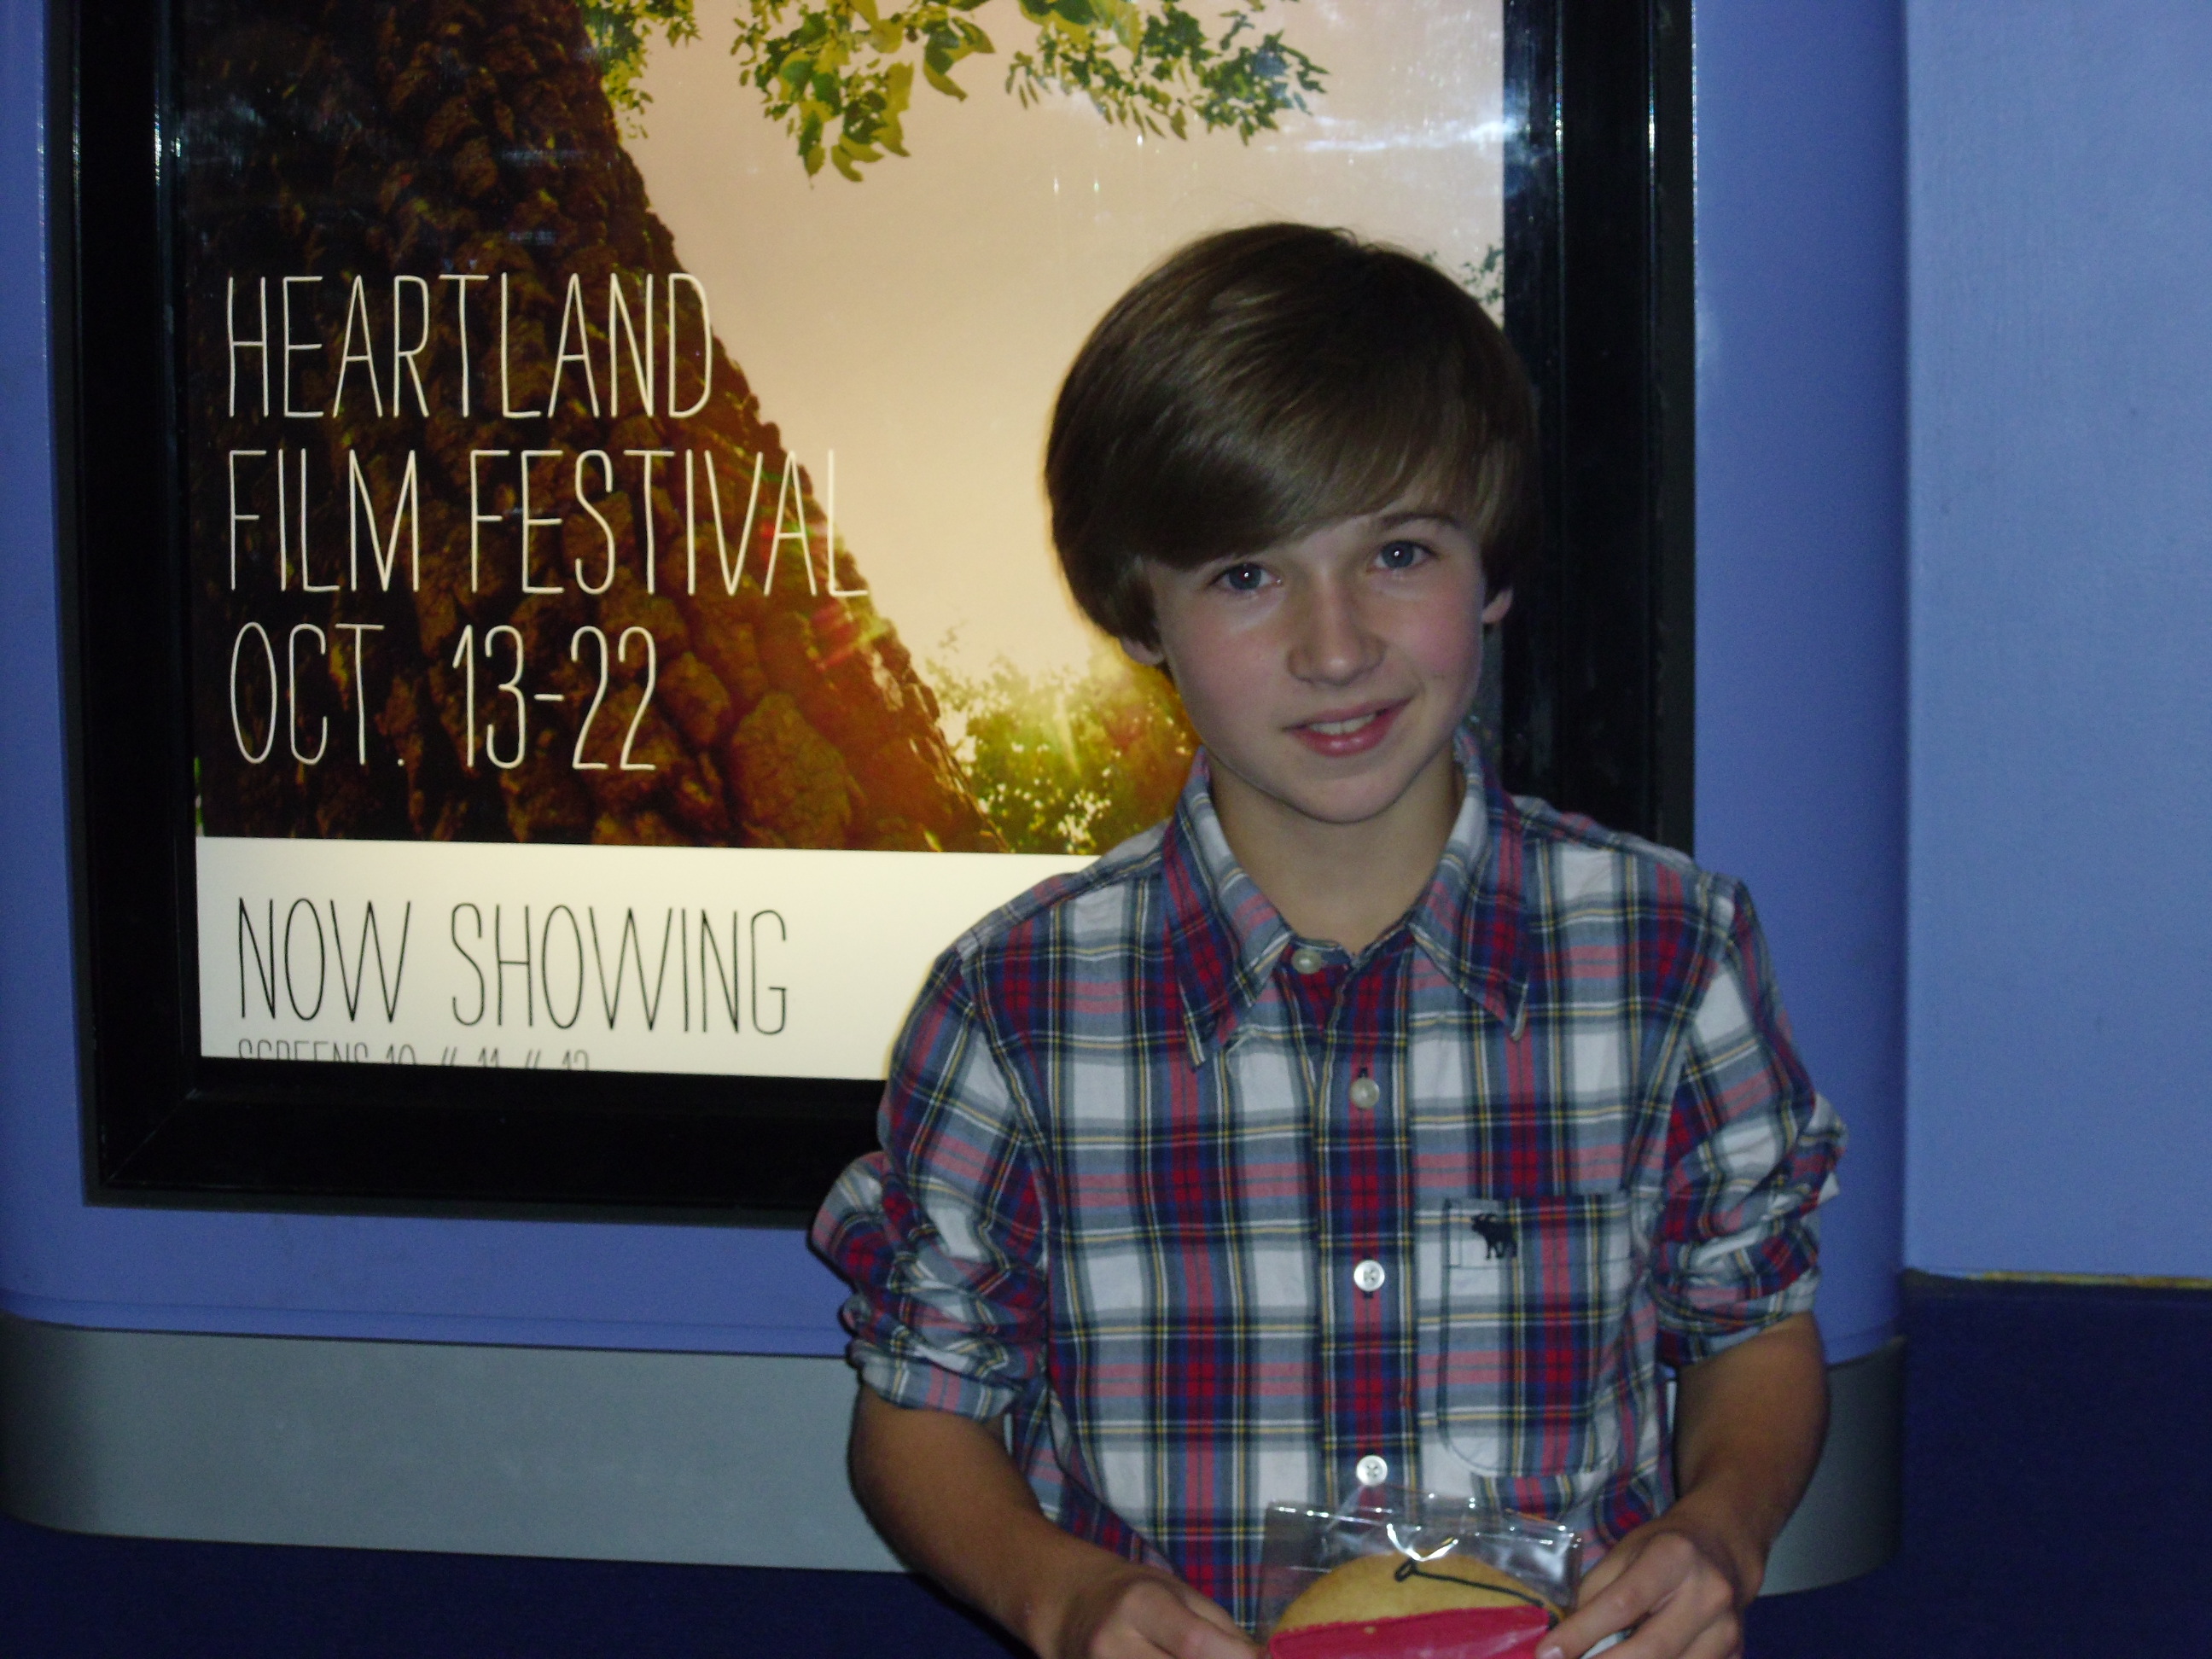 Heartland Film Festival